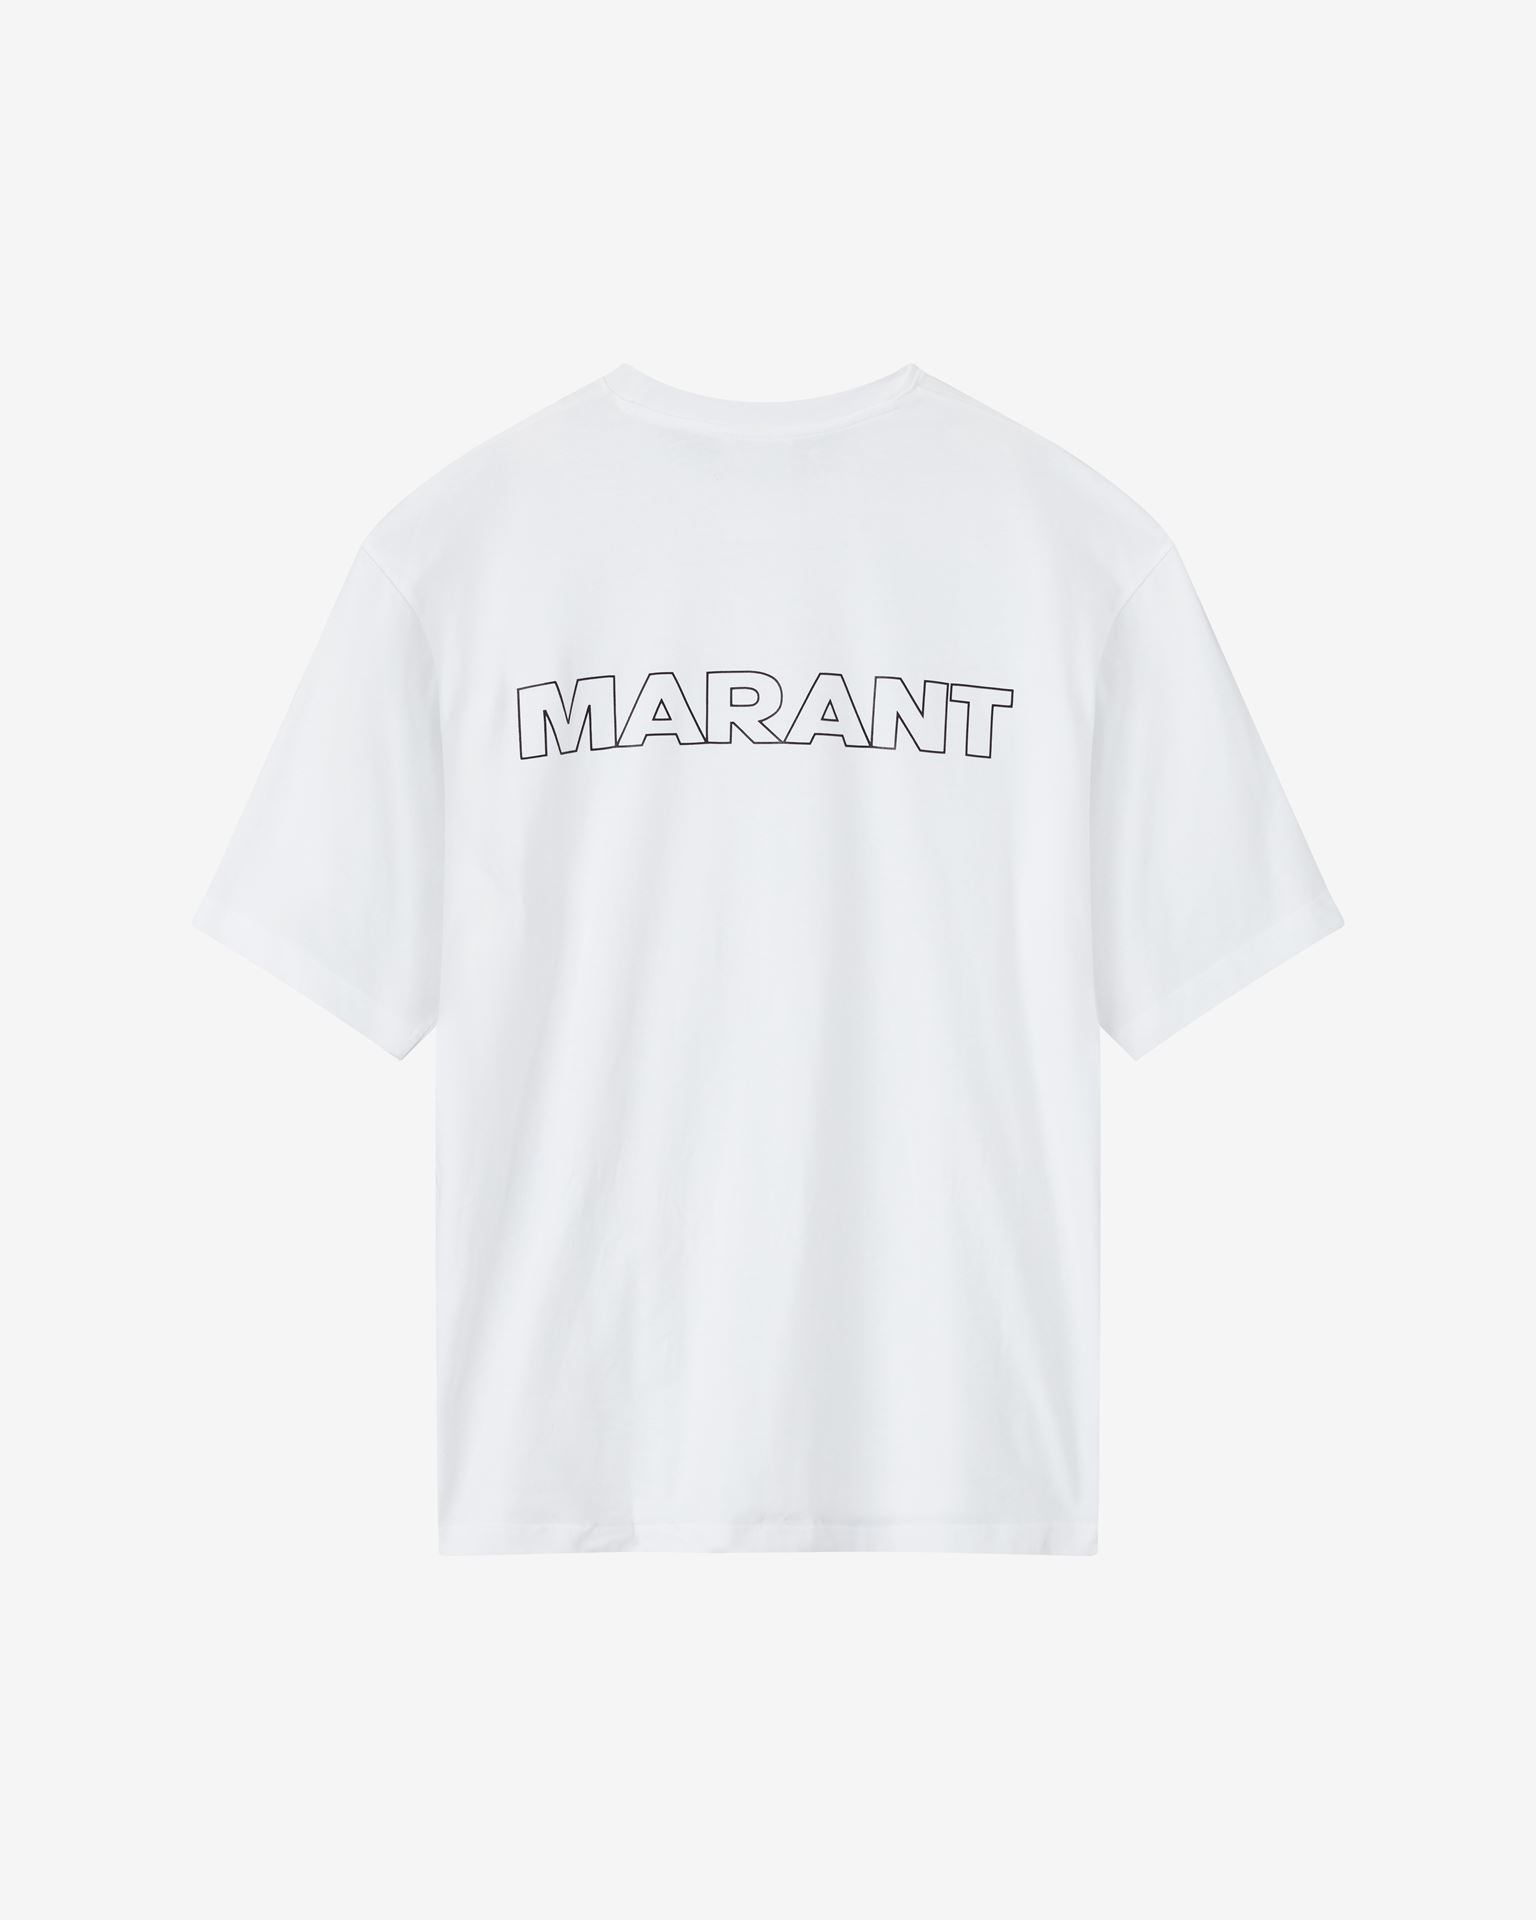 Isabel Marant, Guizy marant Cotton Tee-shirt - Men - White